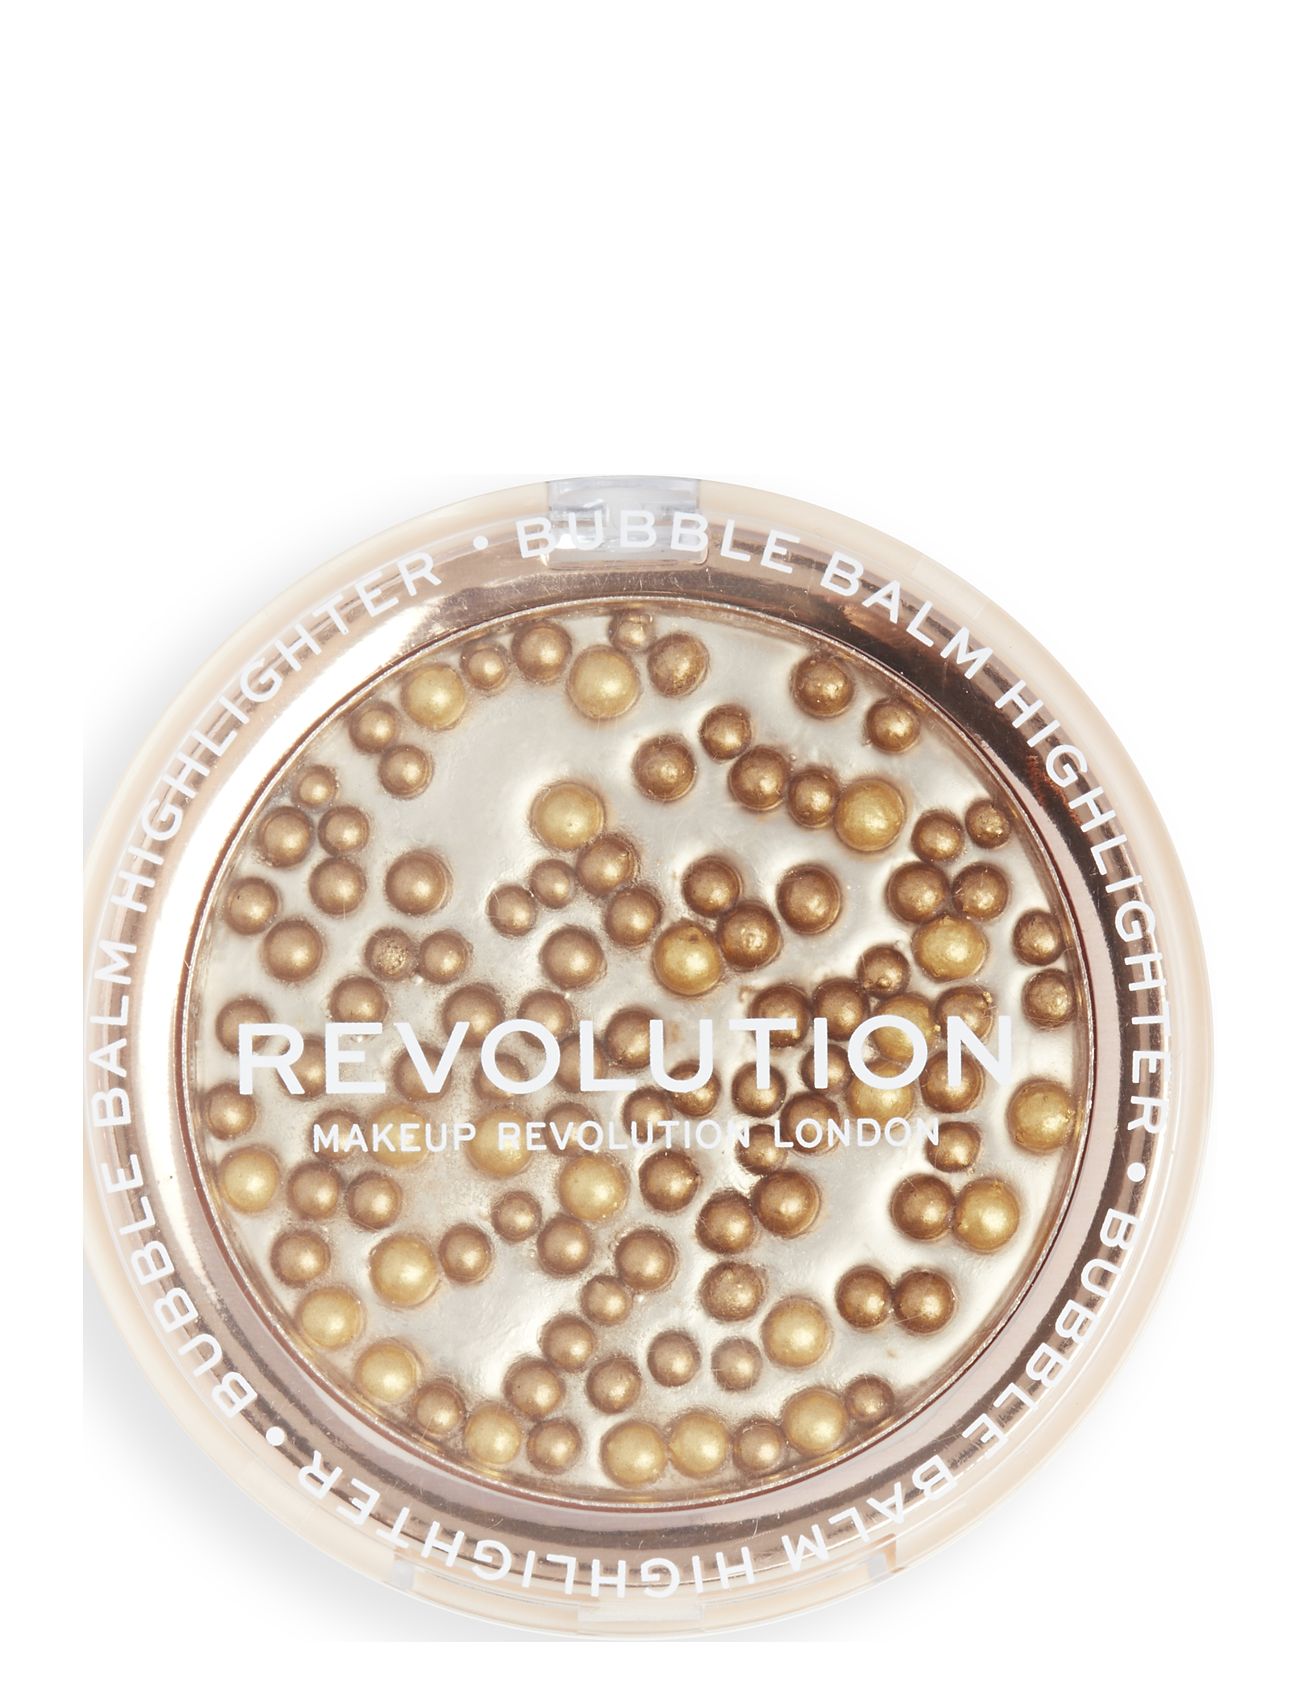 Revolution Bubble Balm Highlight 02 Bronze Highlighter Contour Smink Gold Makeup Revolution